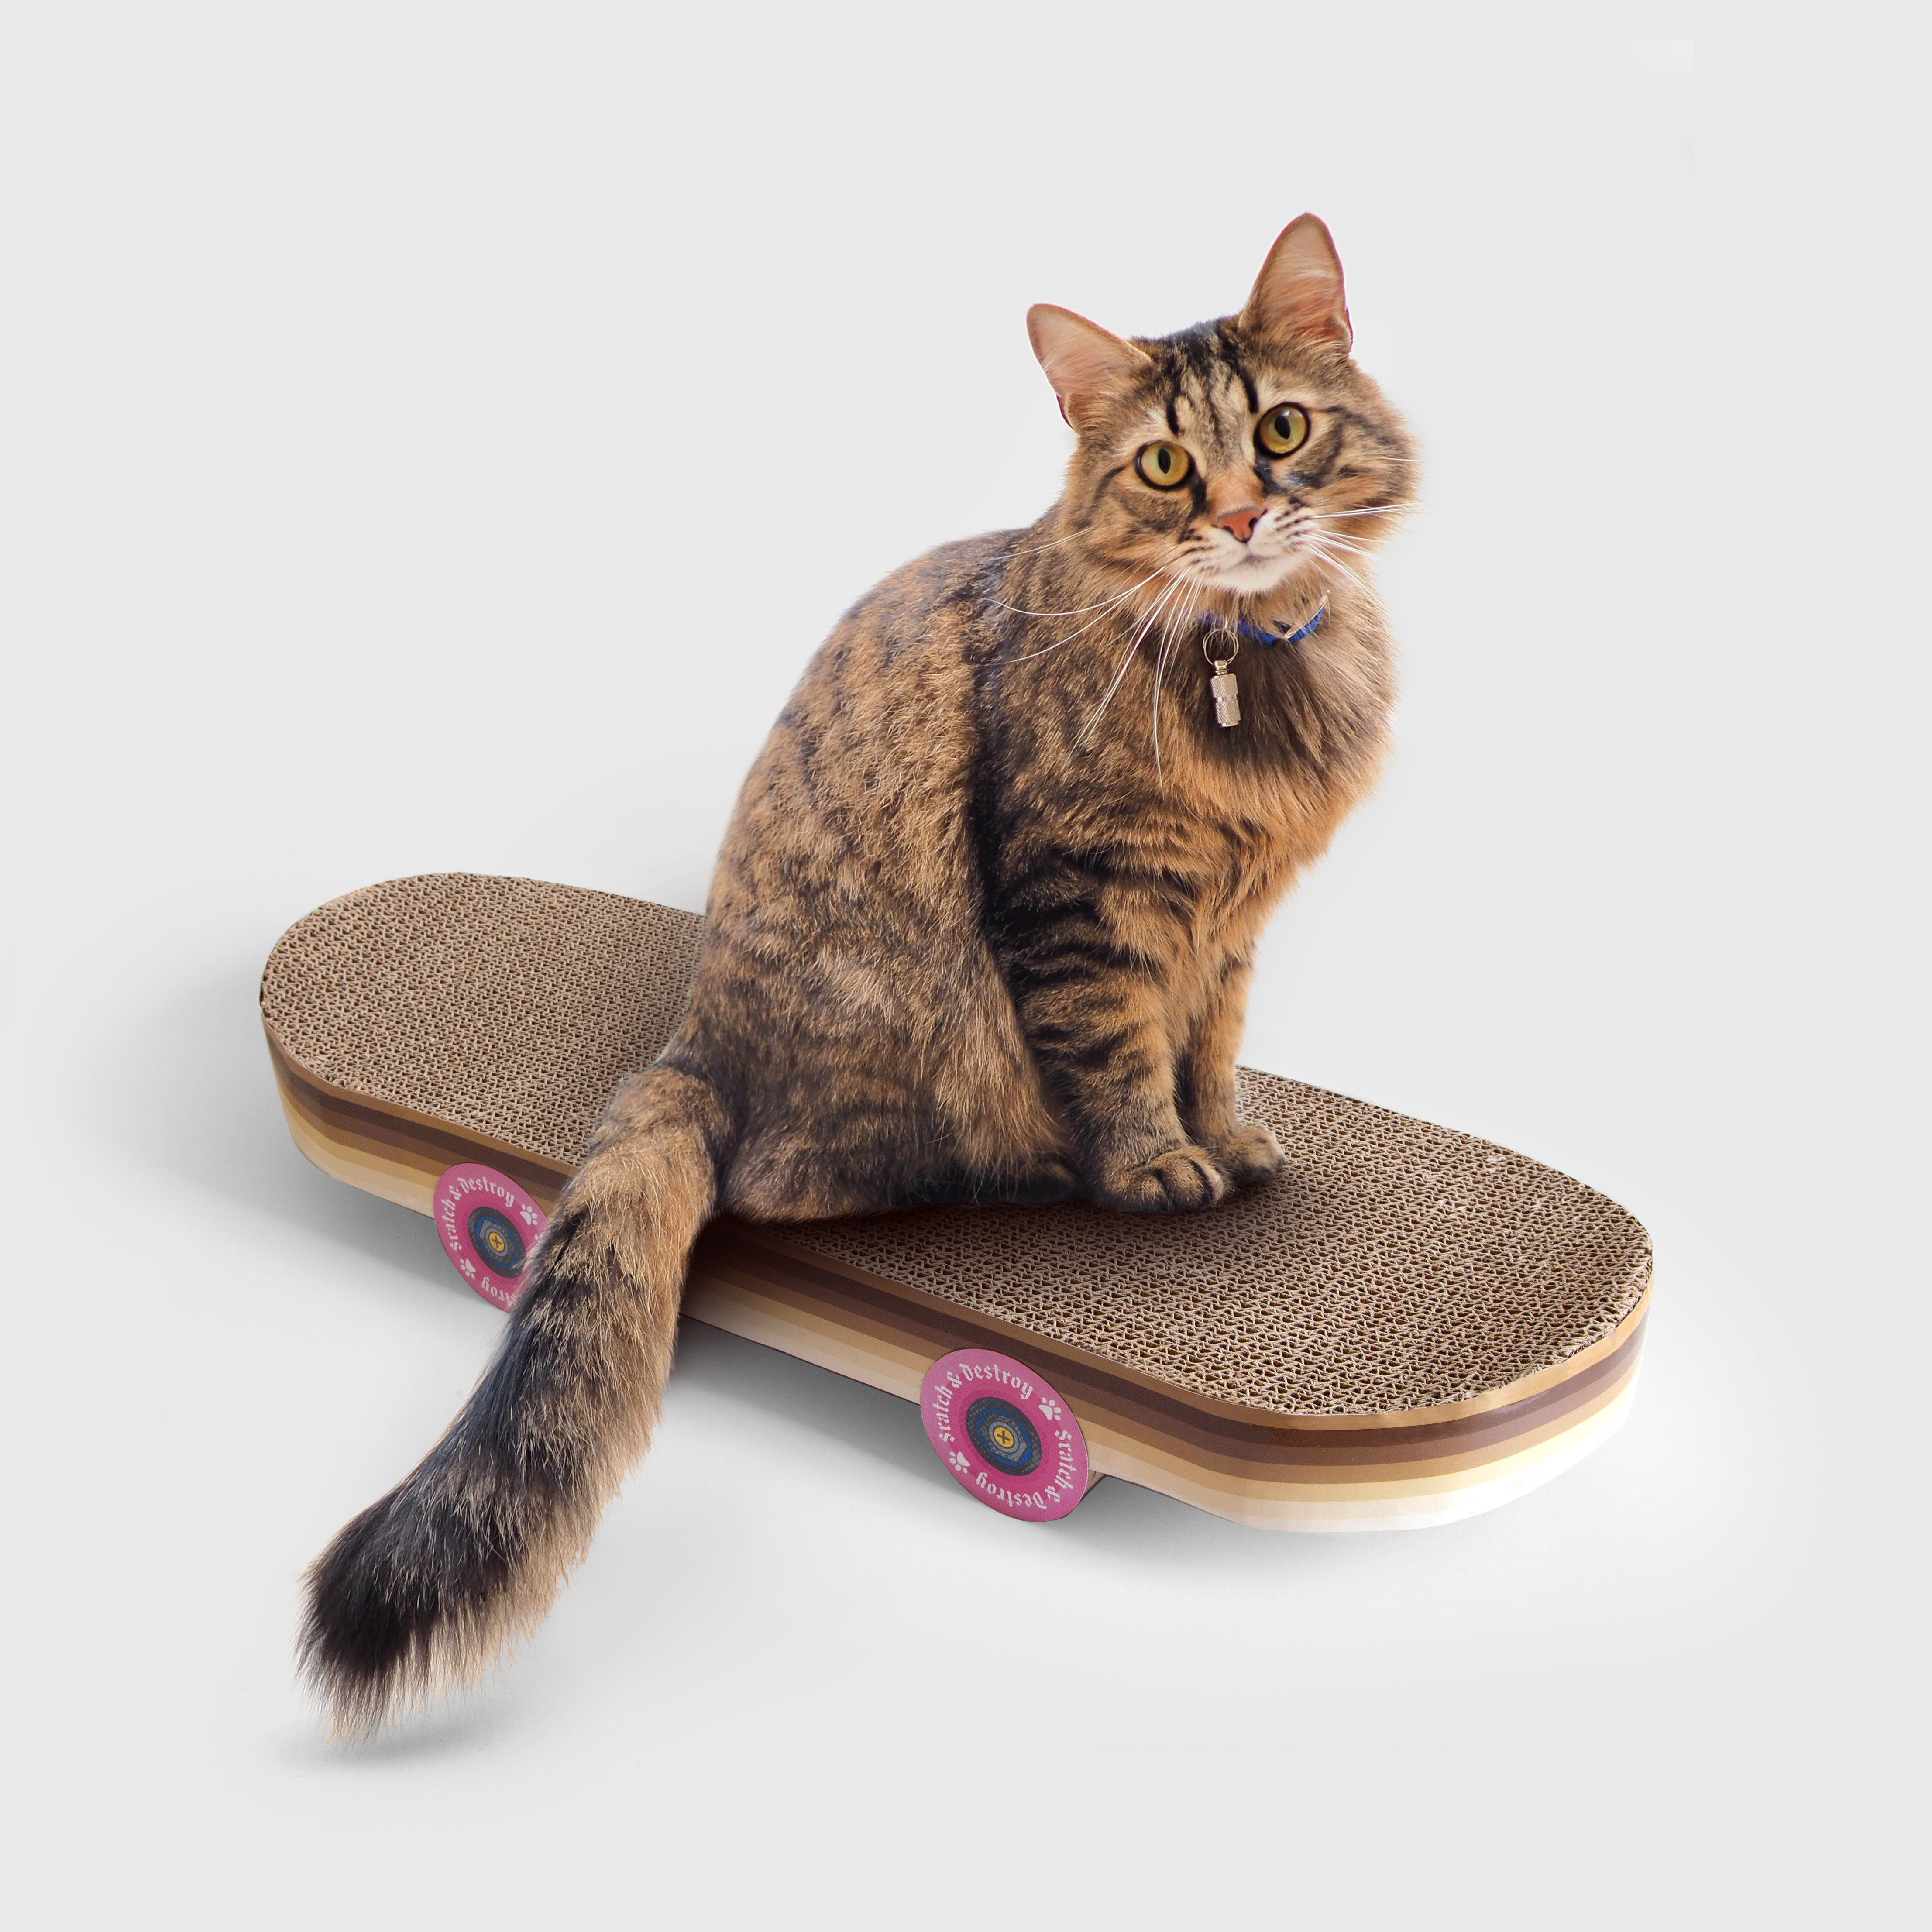 Cardboard scratching skateboard for cats